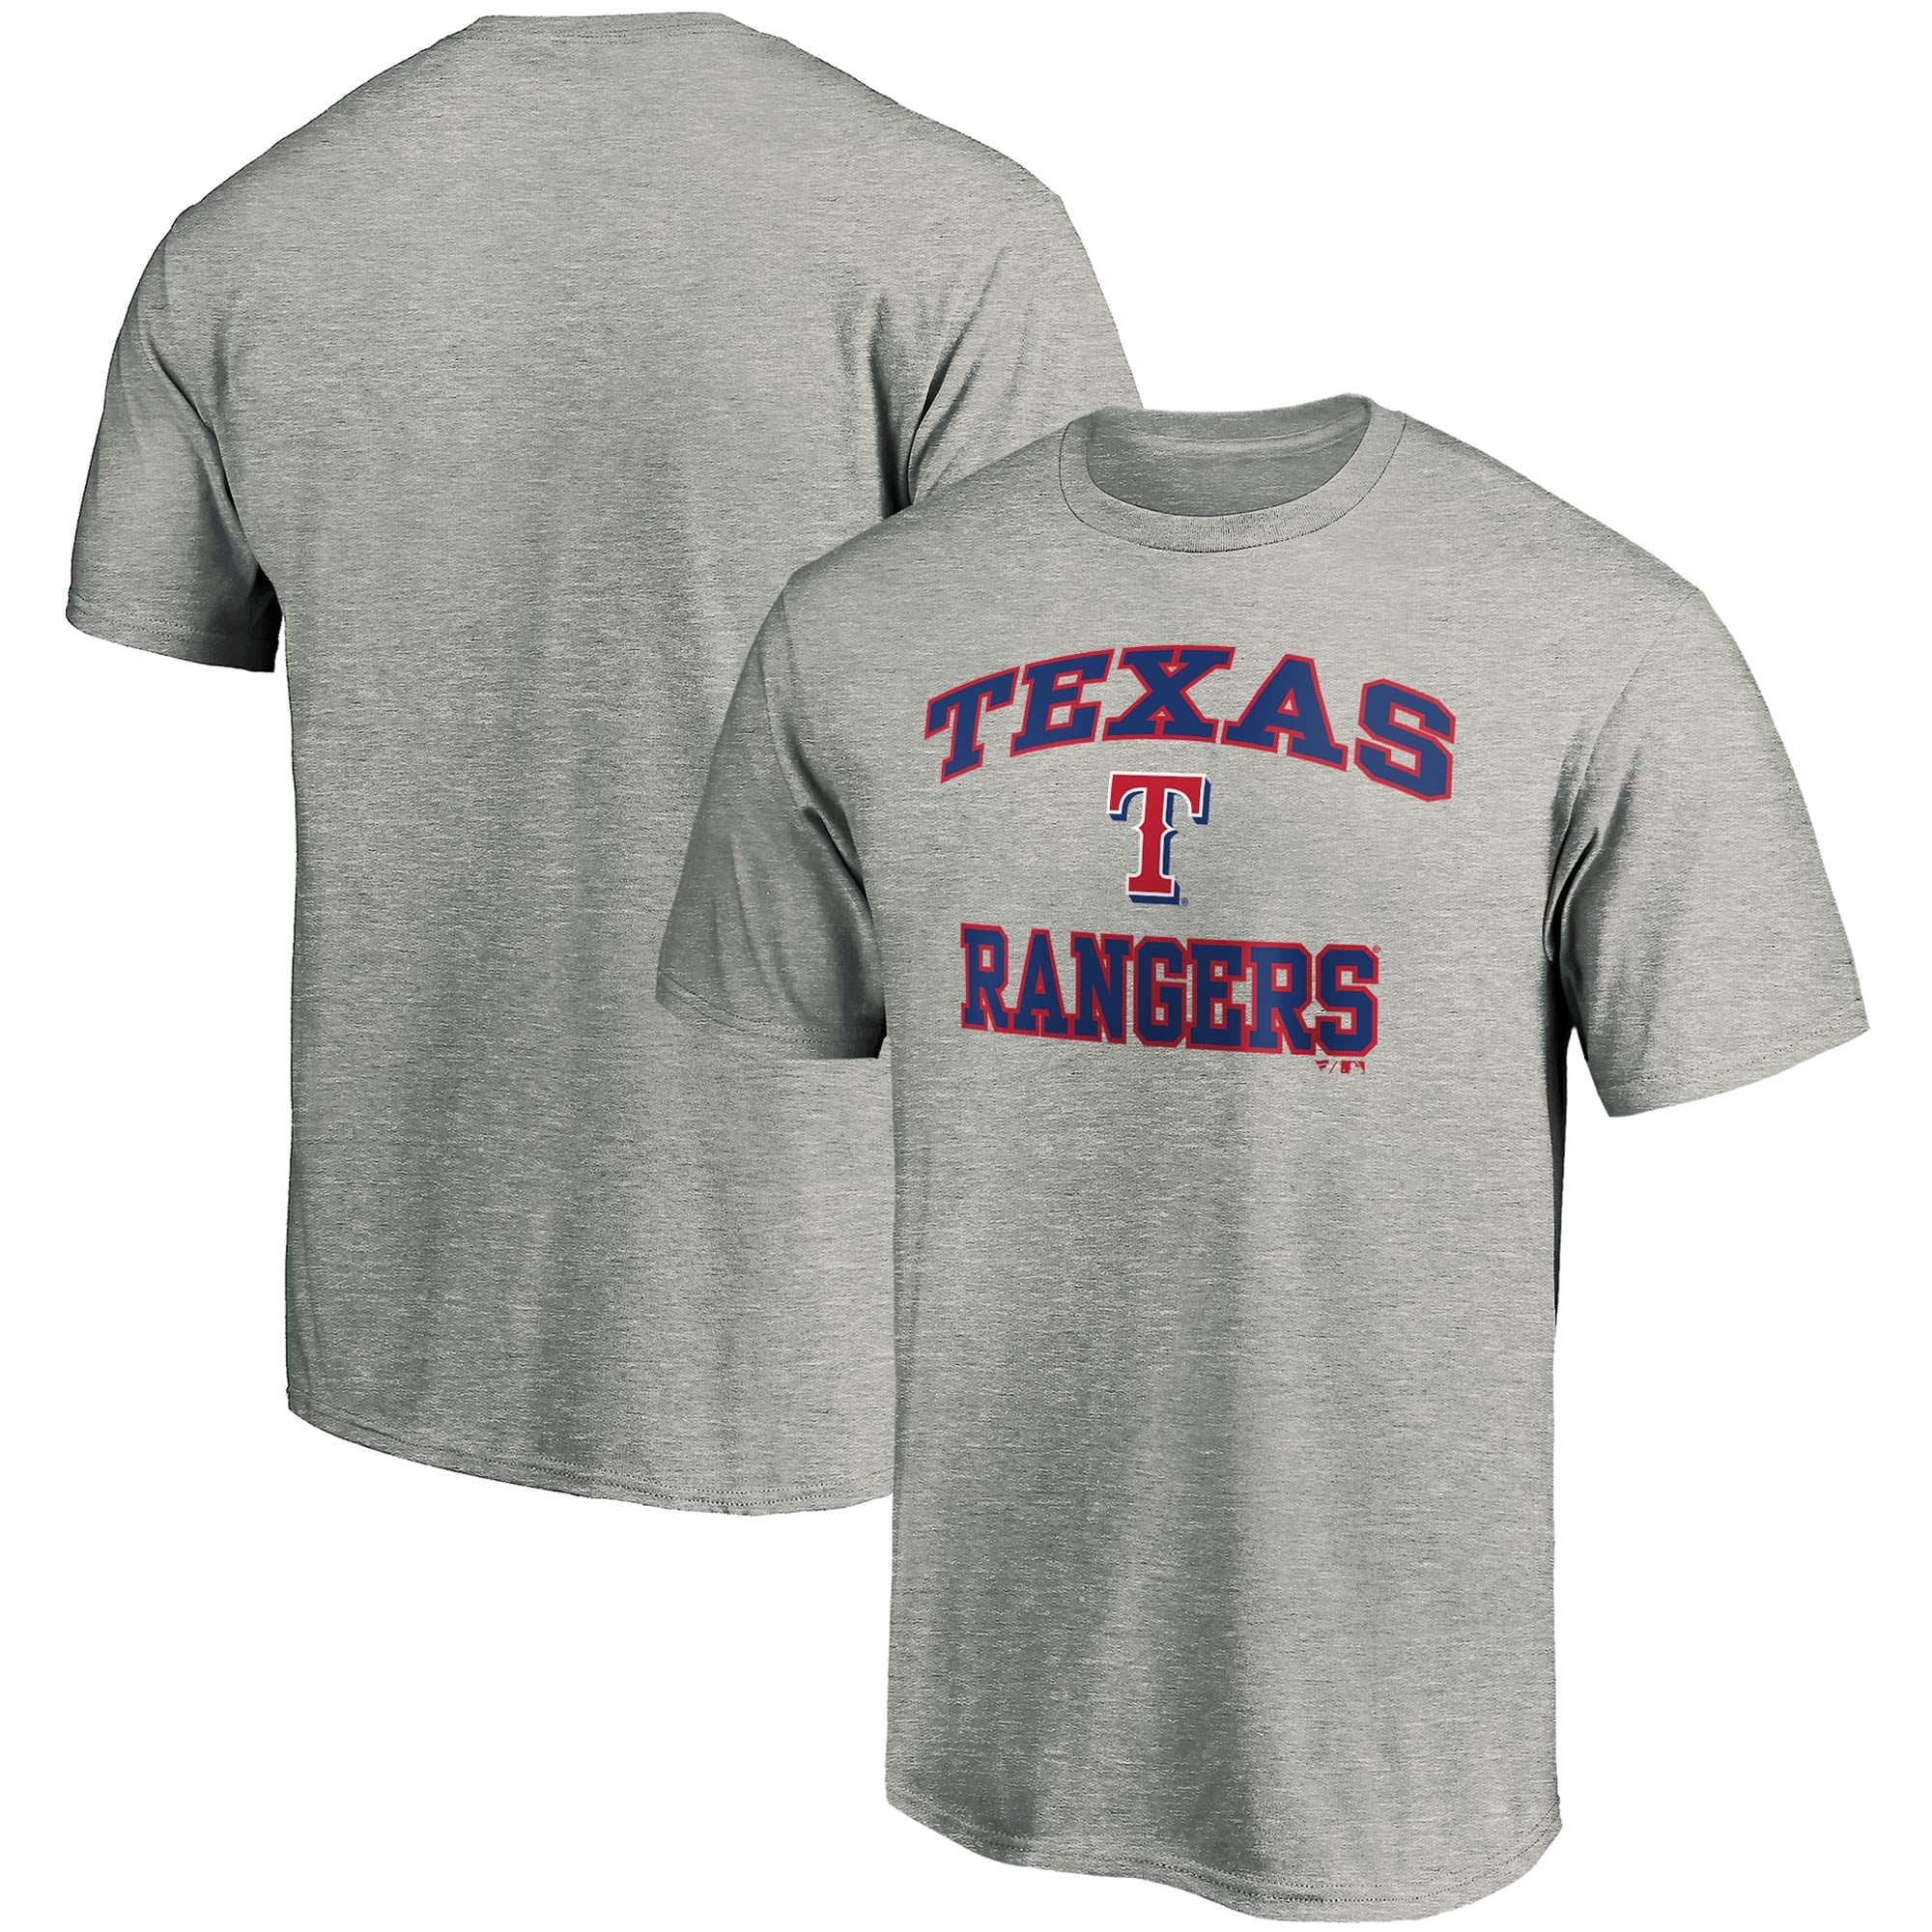 texas rangers t shirts walmart